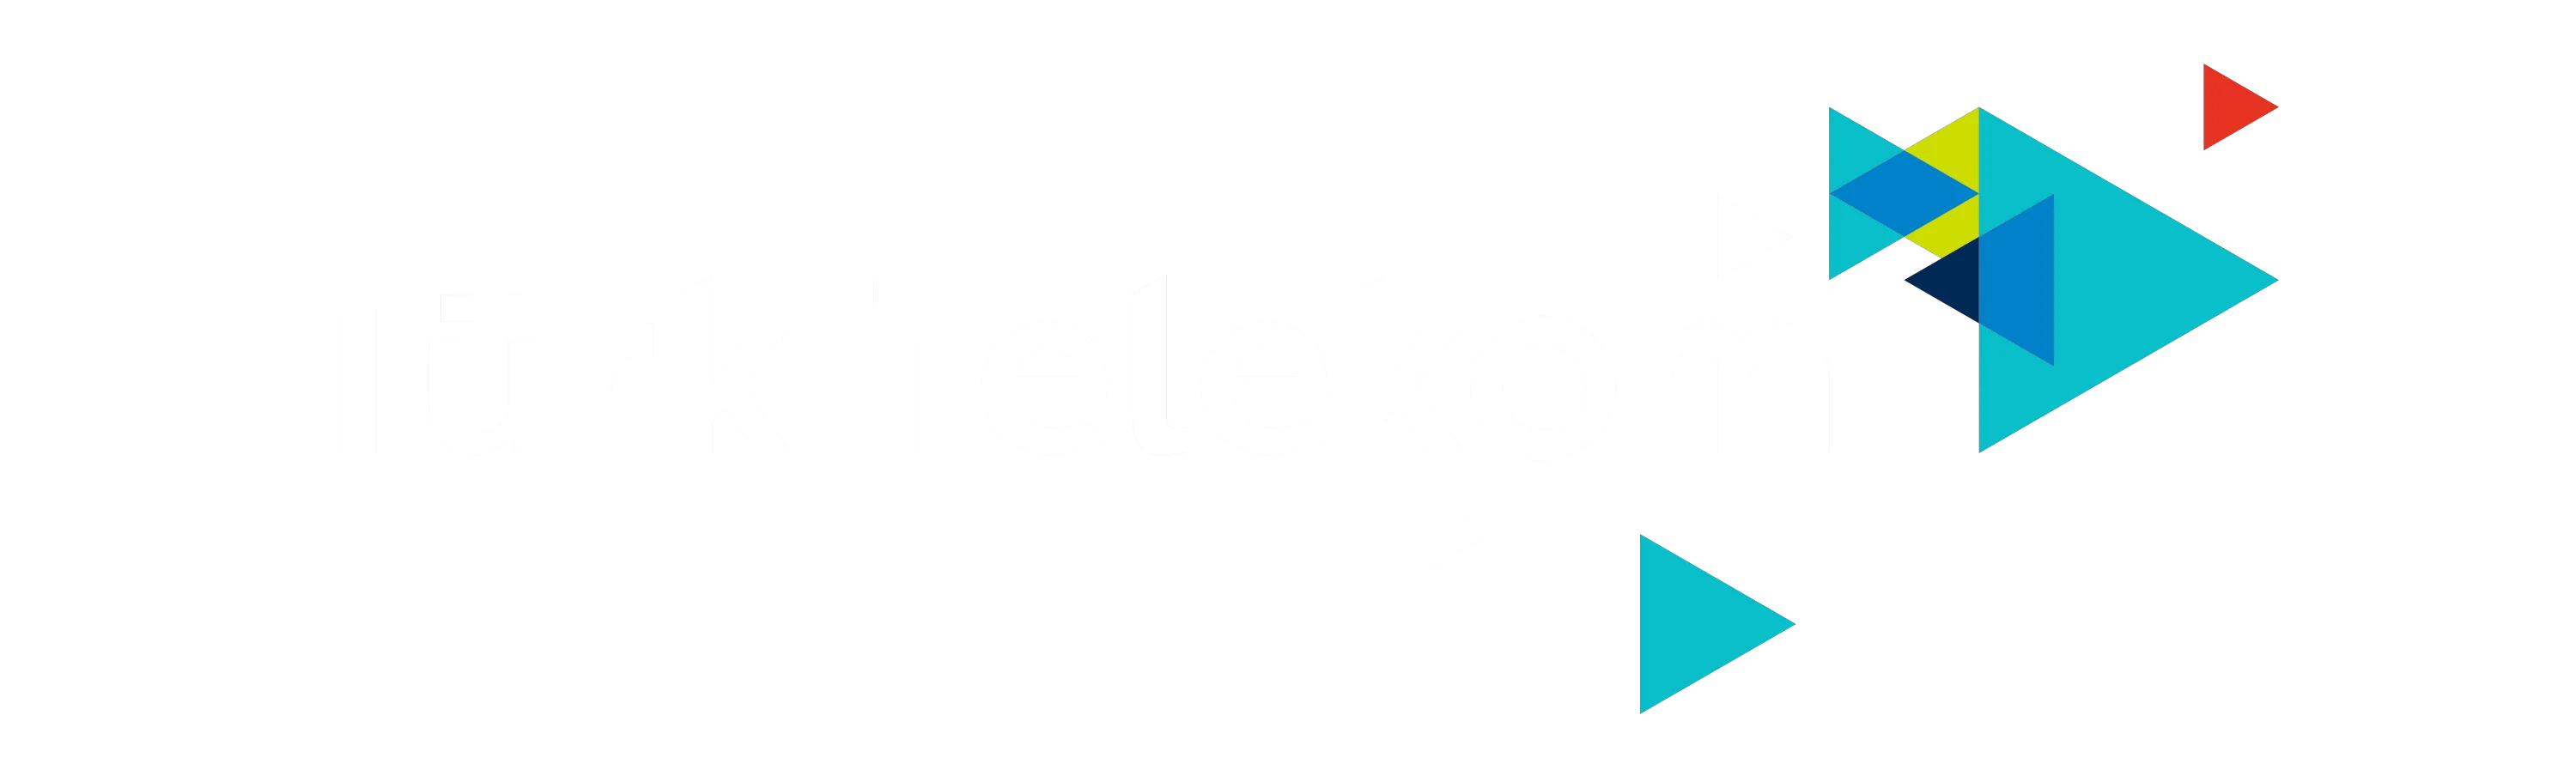 turk-telekom-internet